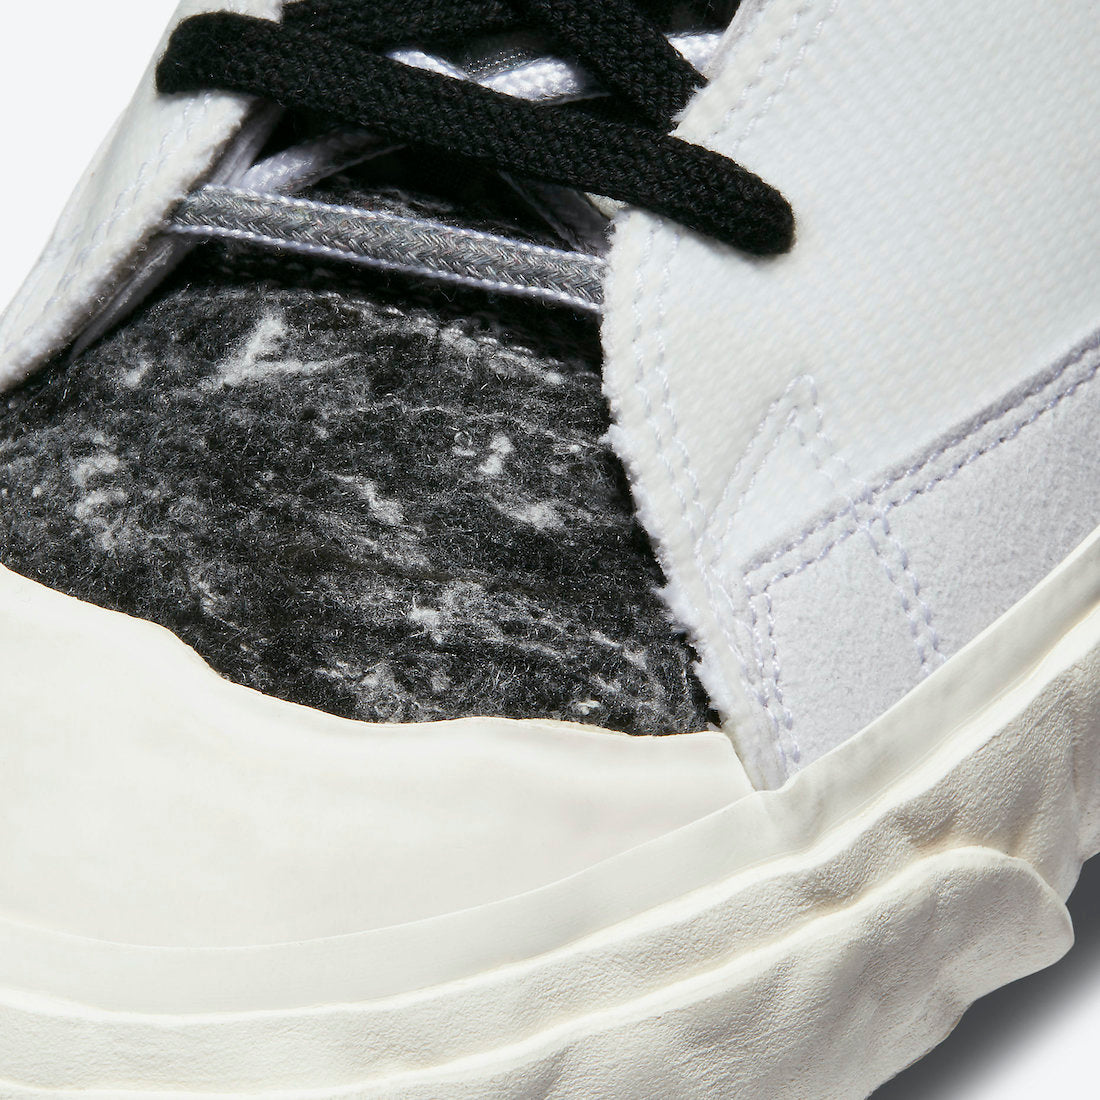 READYMADE x Nike Blazer Mid "White Camo"